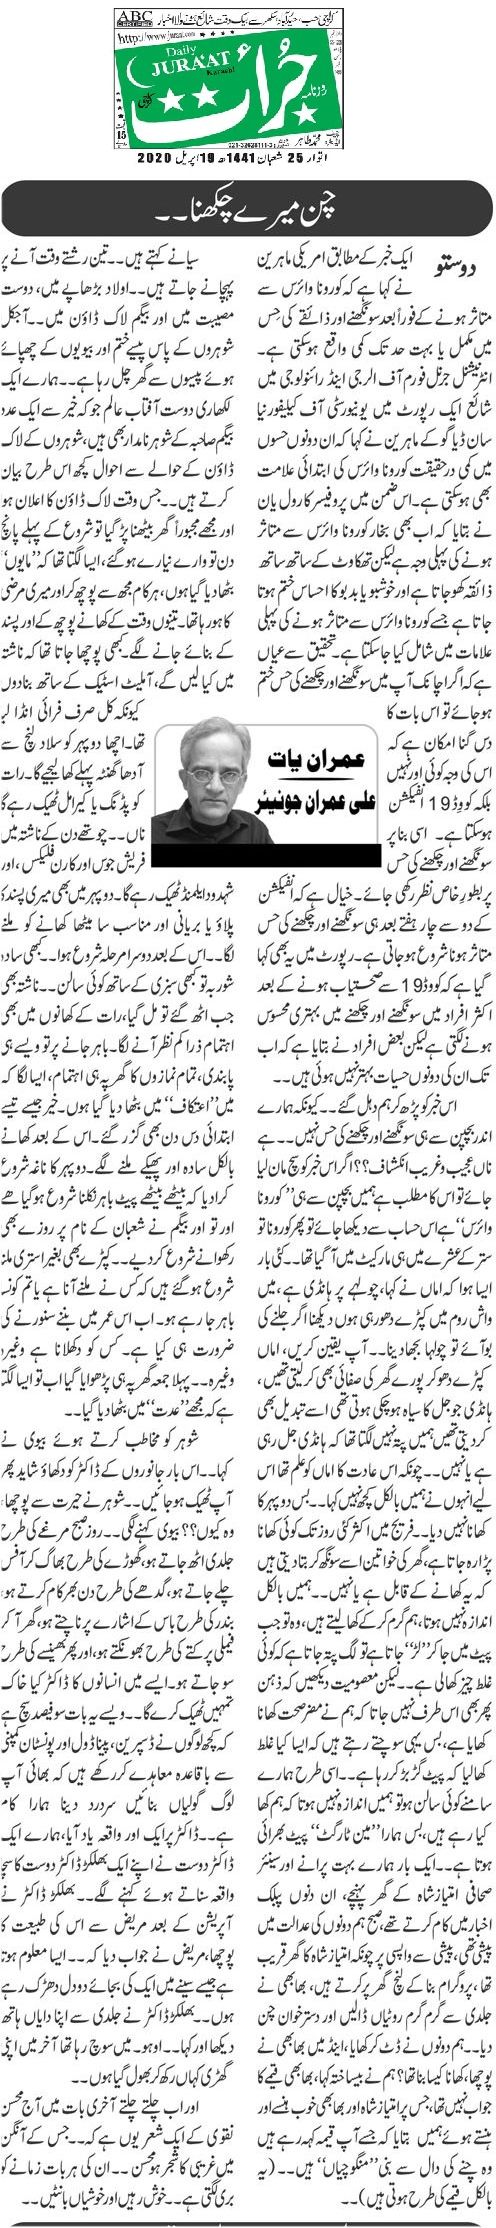 Chun mery chakhna by Ali Imran Junior Imran Yaat Daily Jurrat